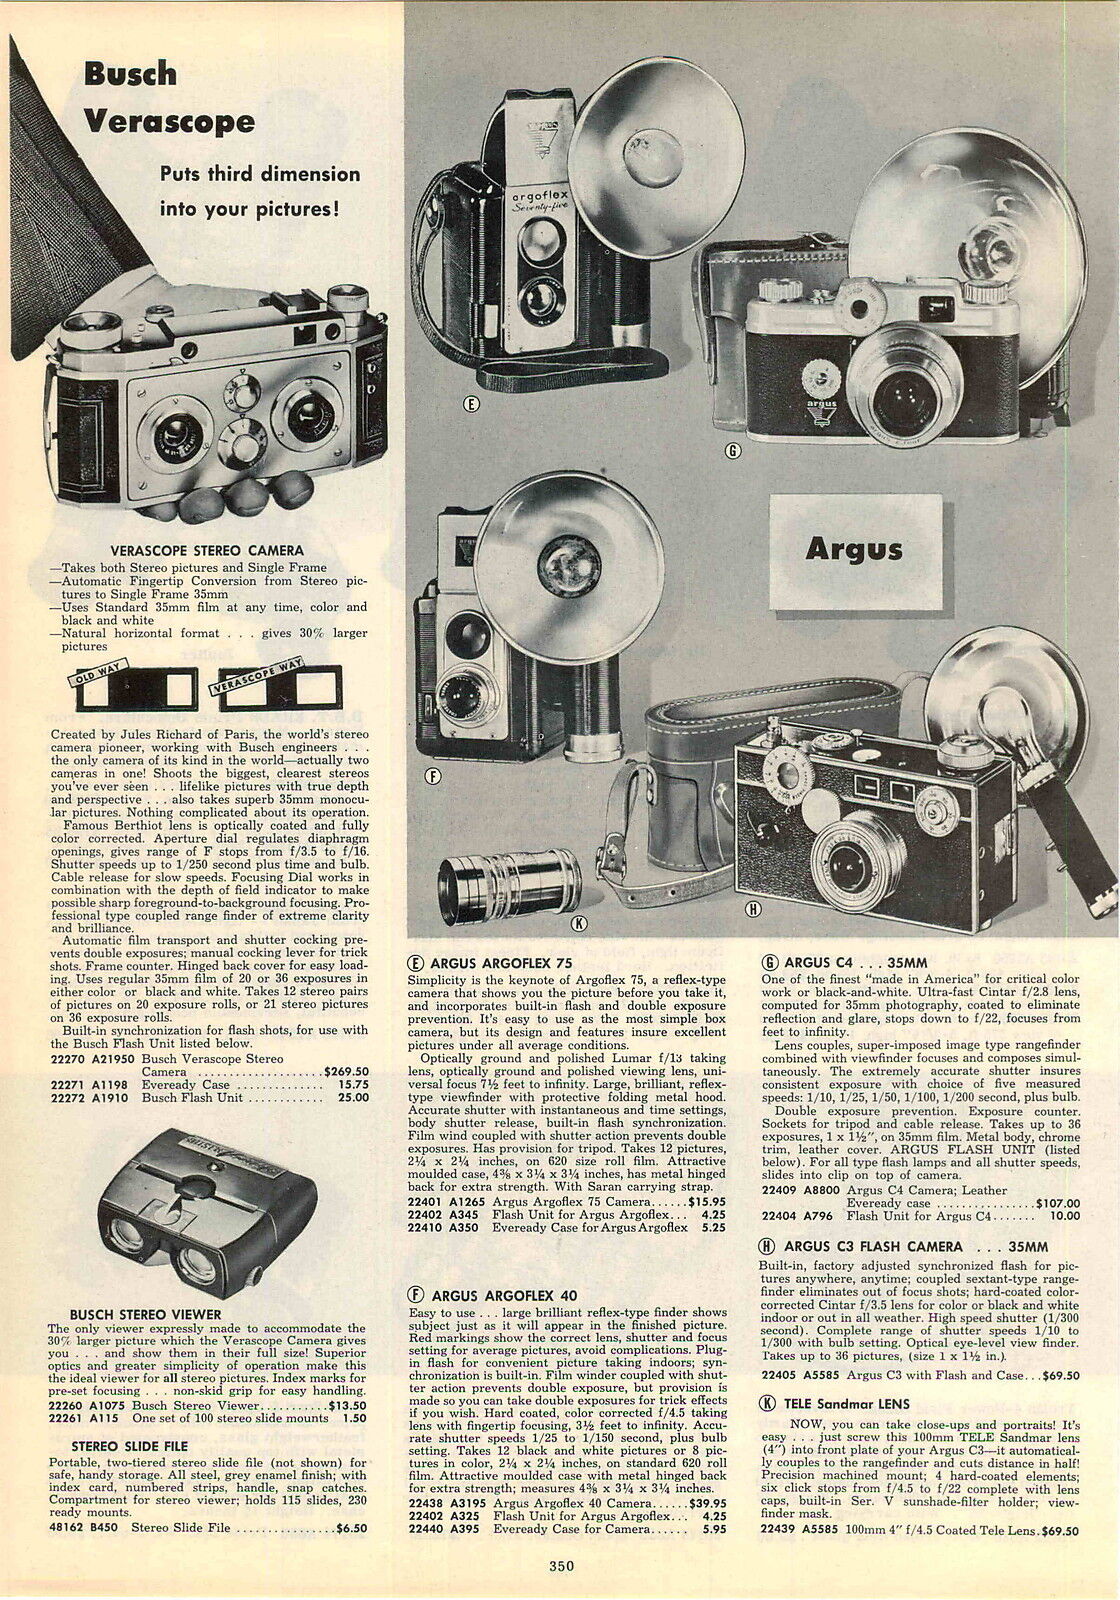 1953 ADVERT Busch Verascope Stereo Camera Argus C4 35MM